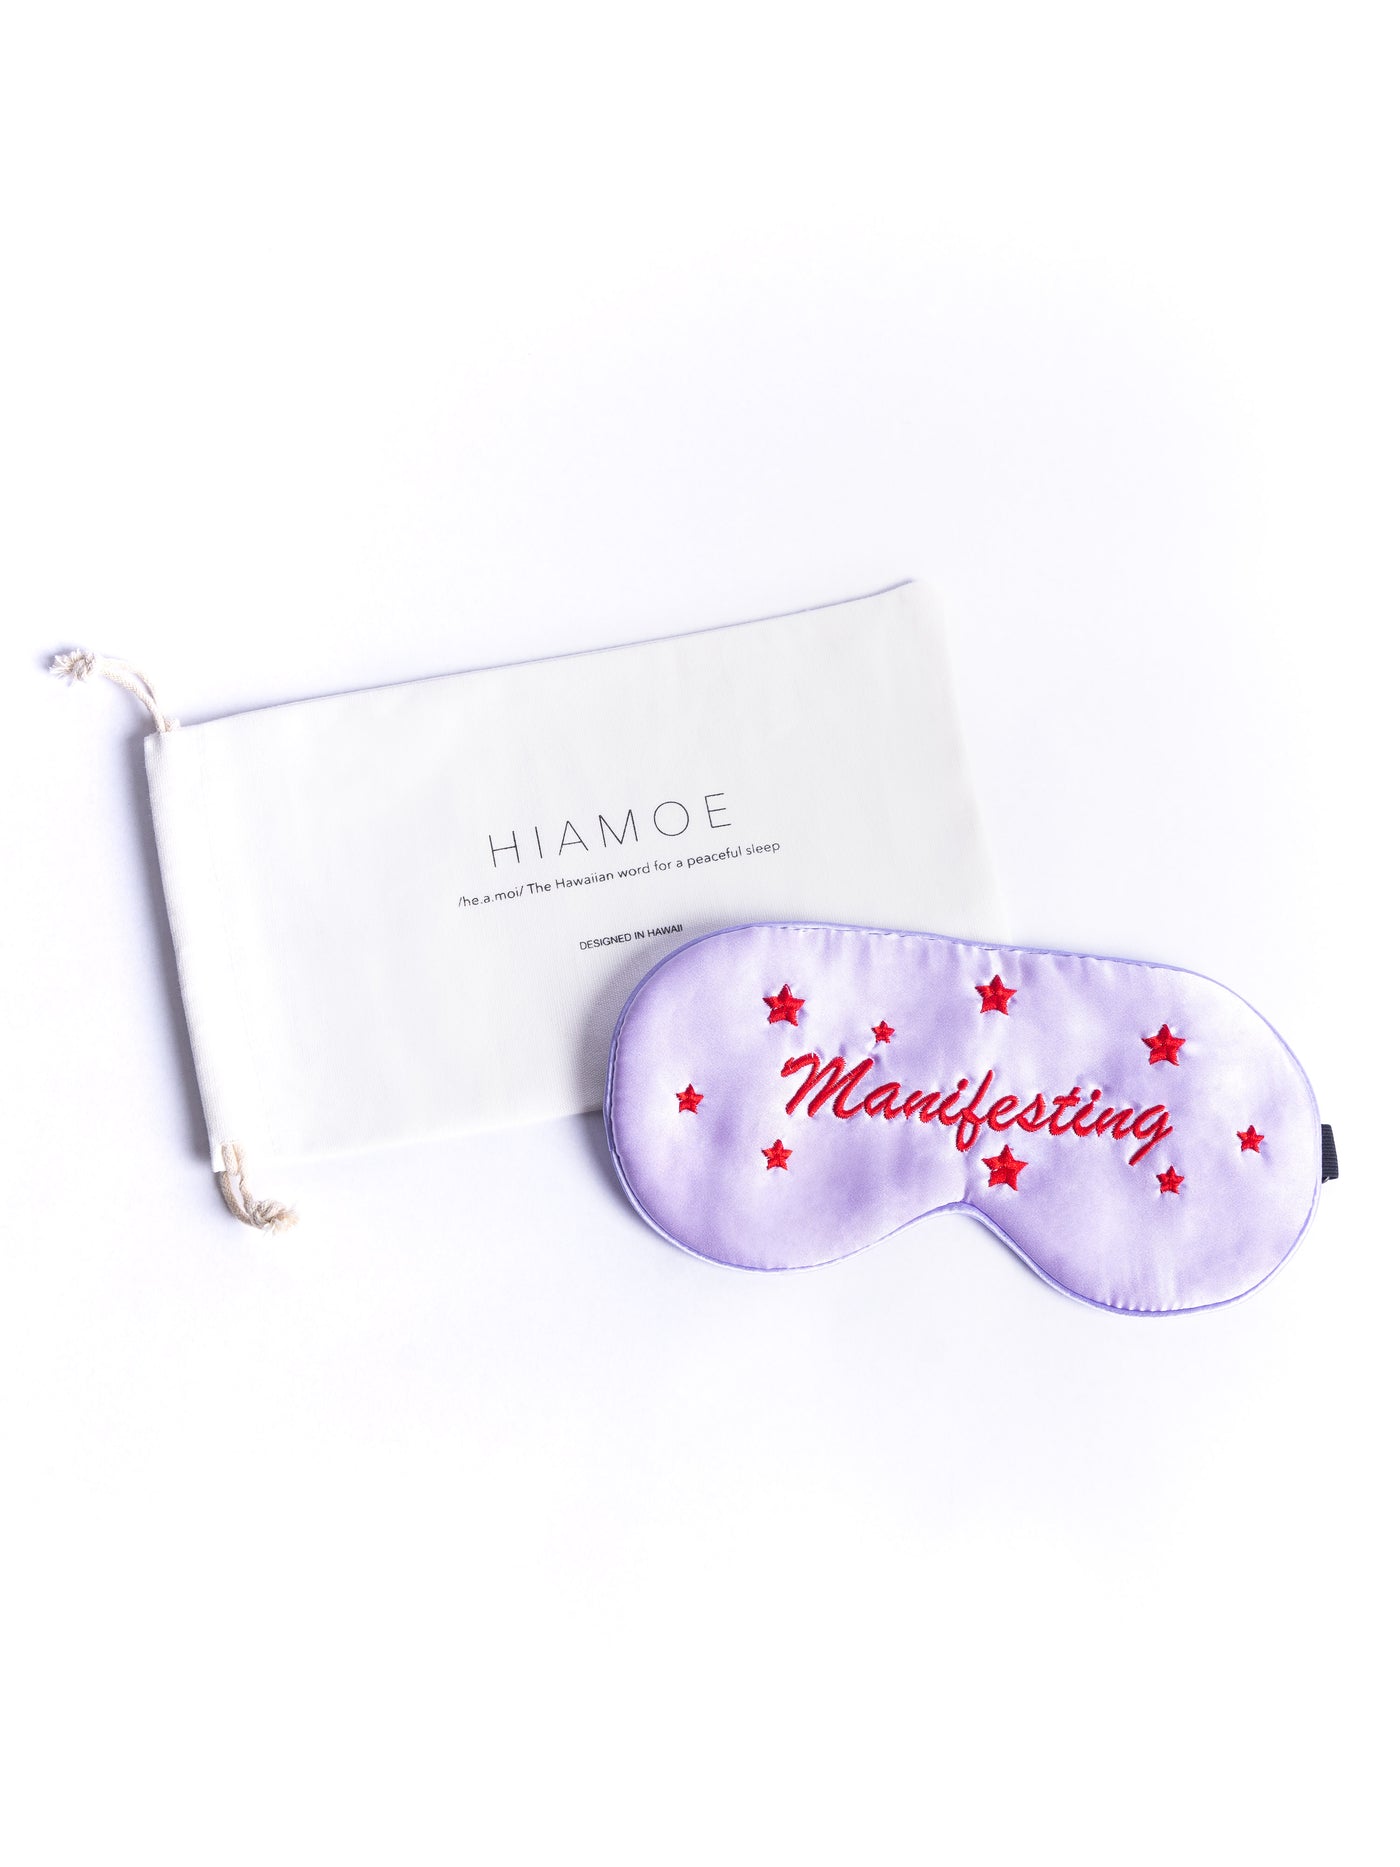 Manifesting + Lilac Silk Sleep Mask